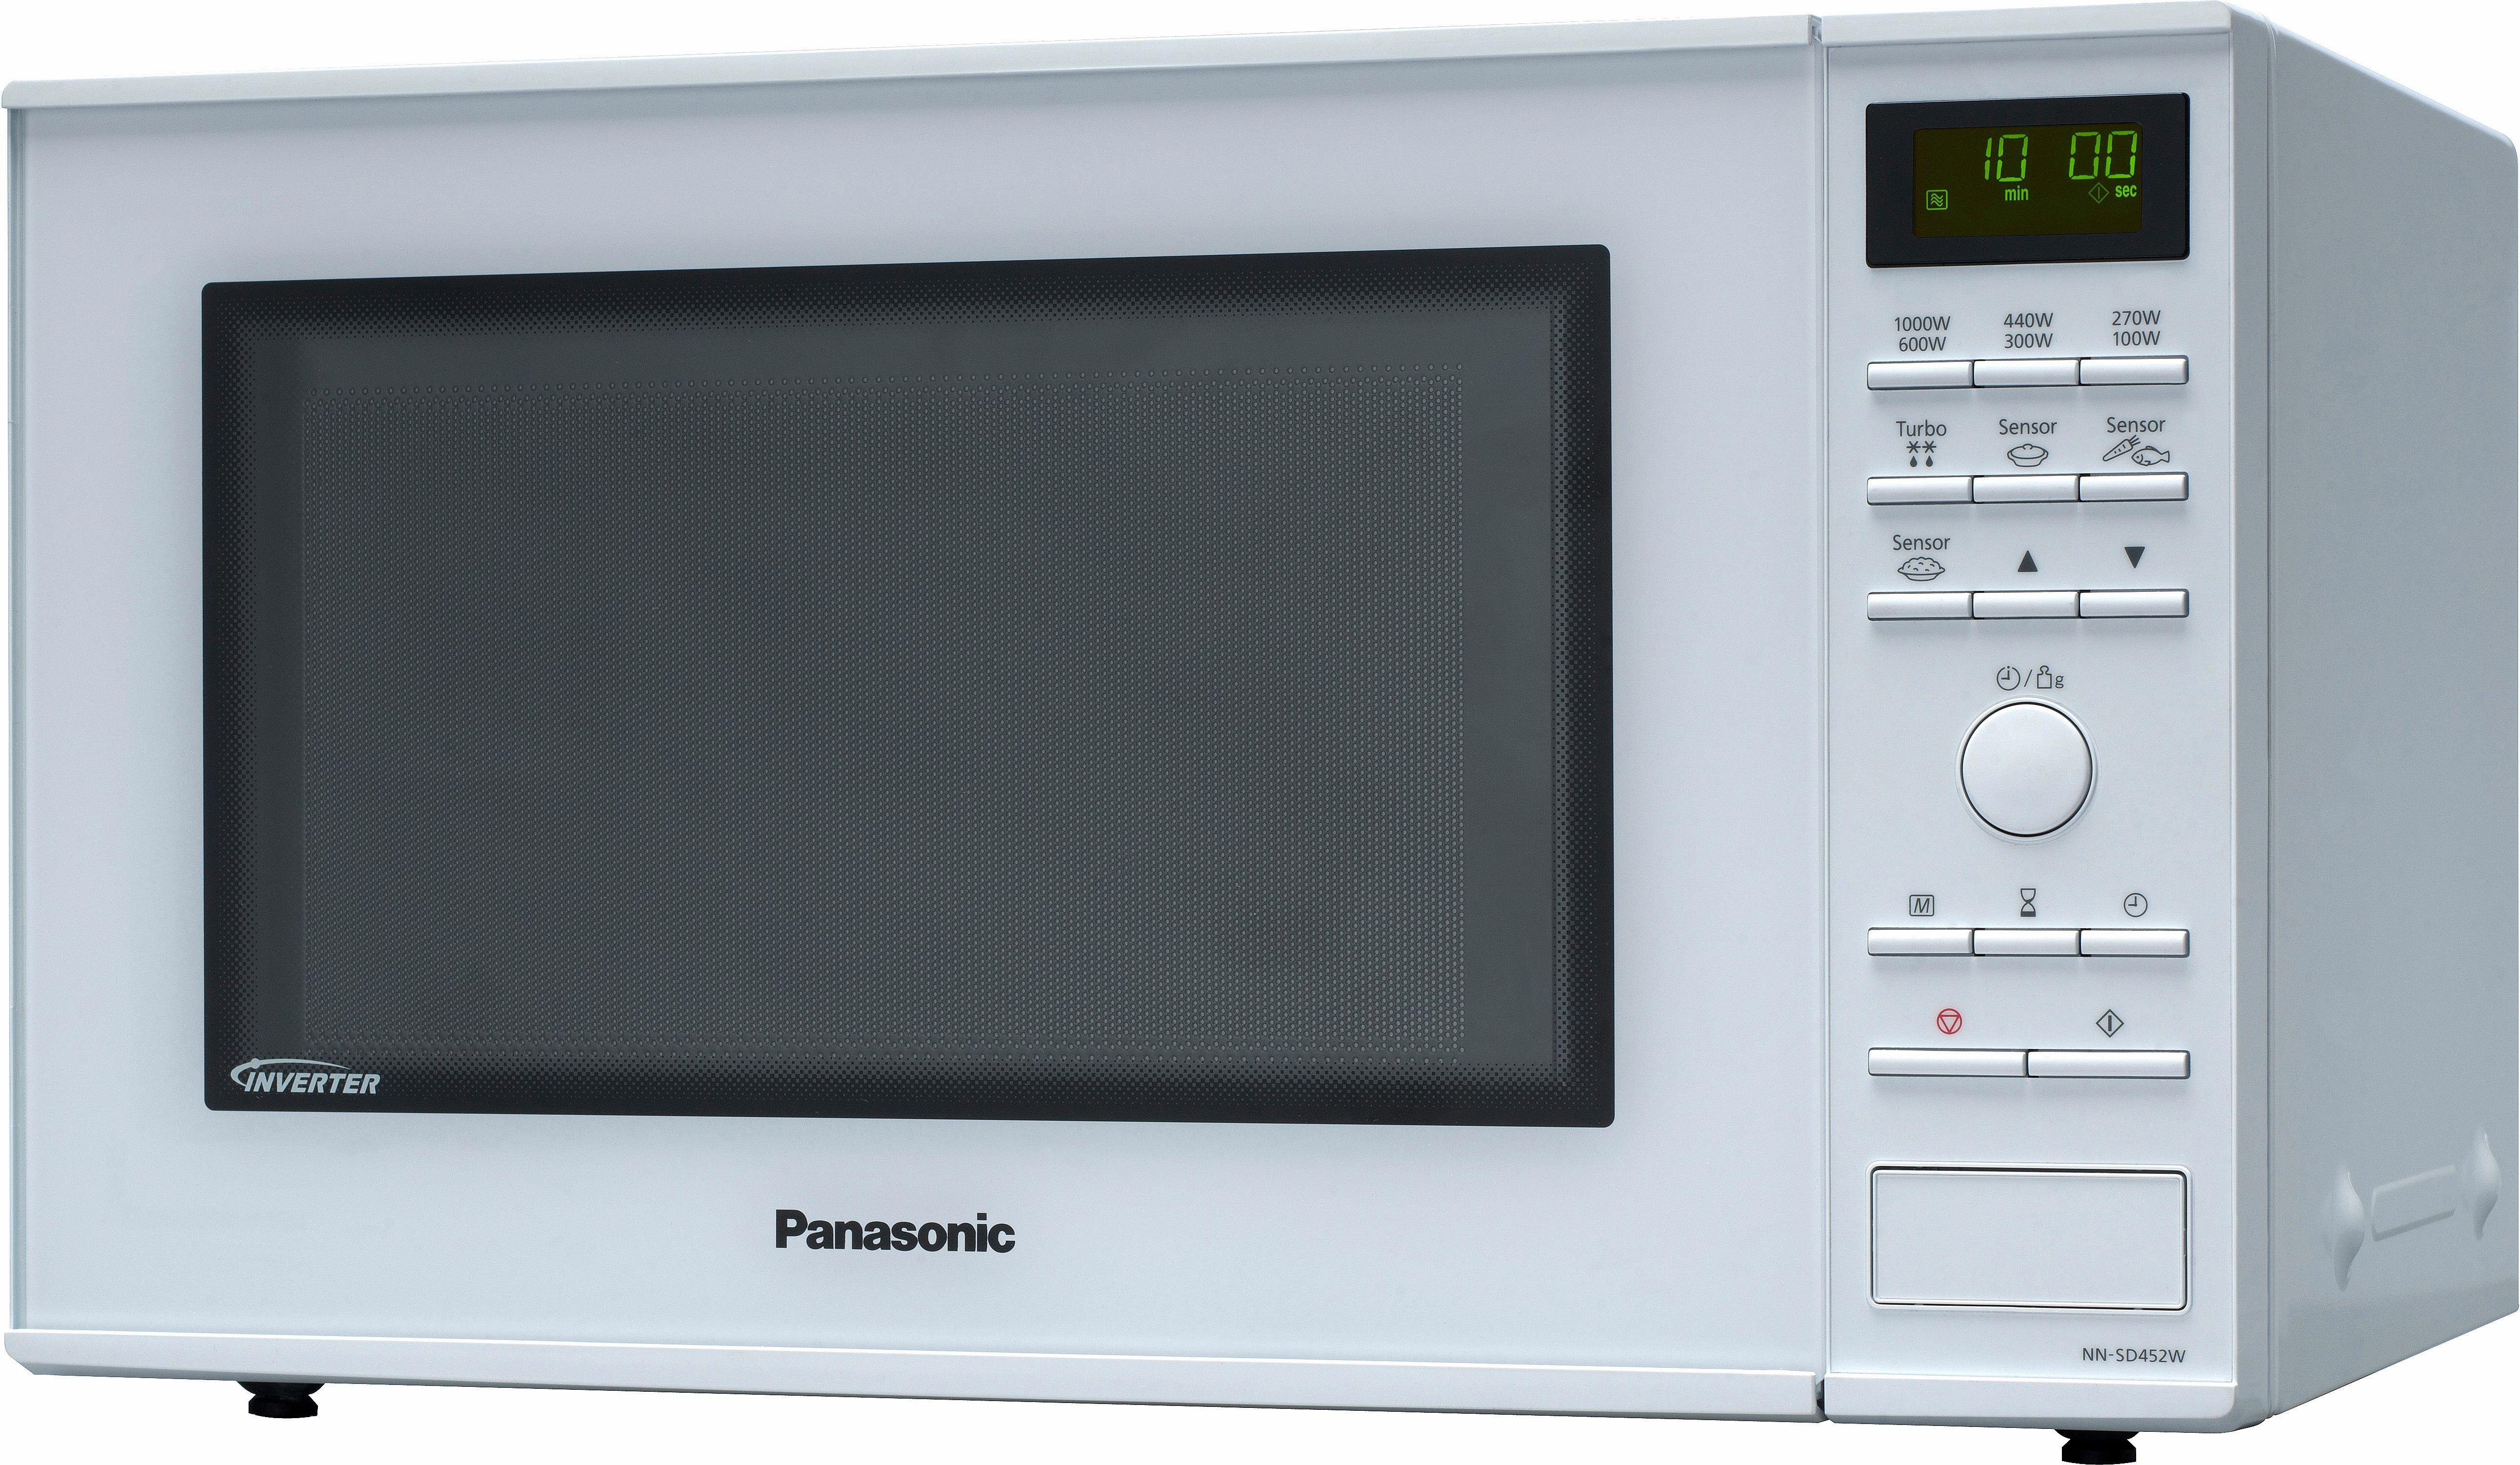 Panasonic PANASONIC magnetron NN-SD452WEPG, 32 liter gaarruimte, 1000 W magnetronvermogen